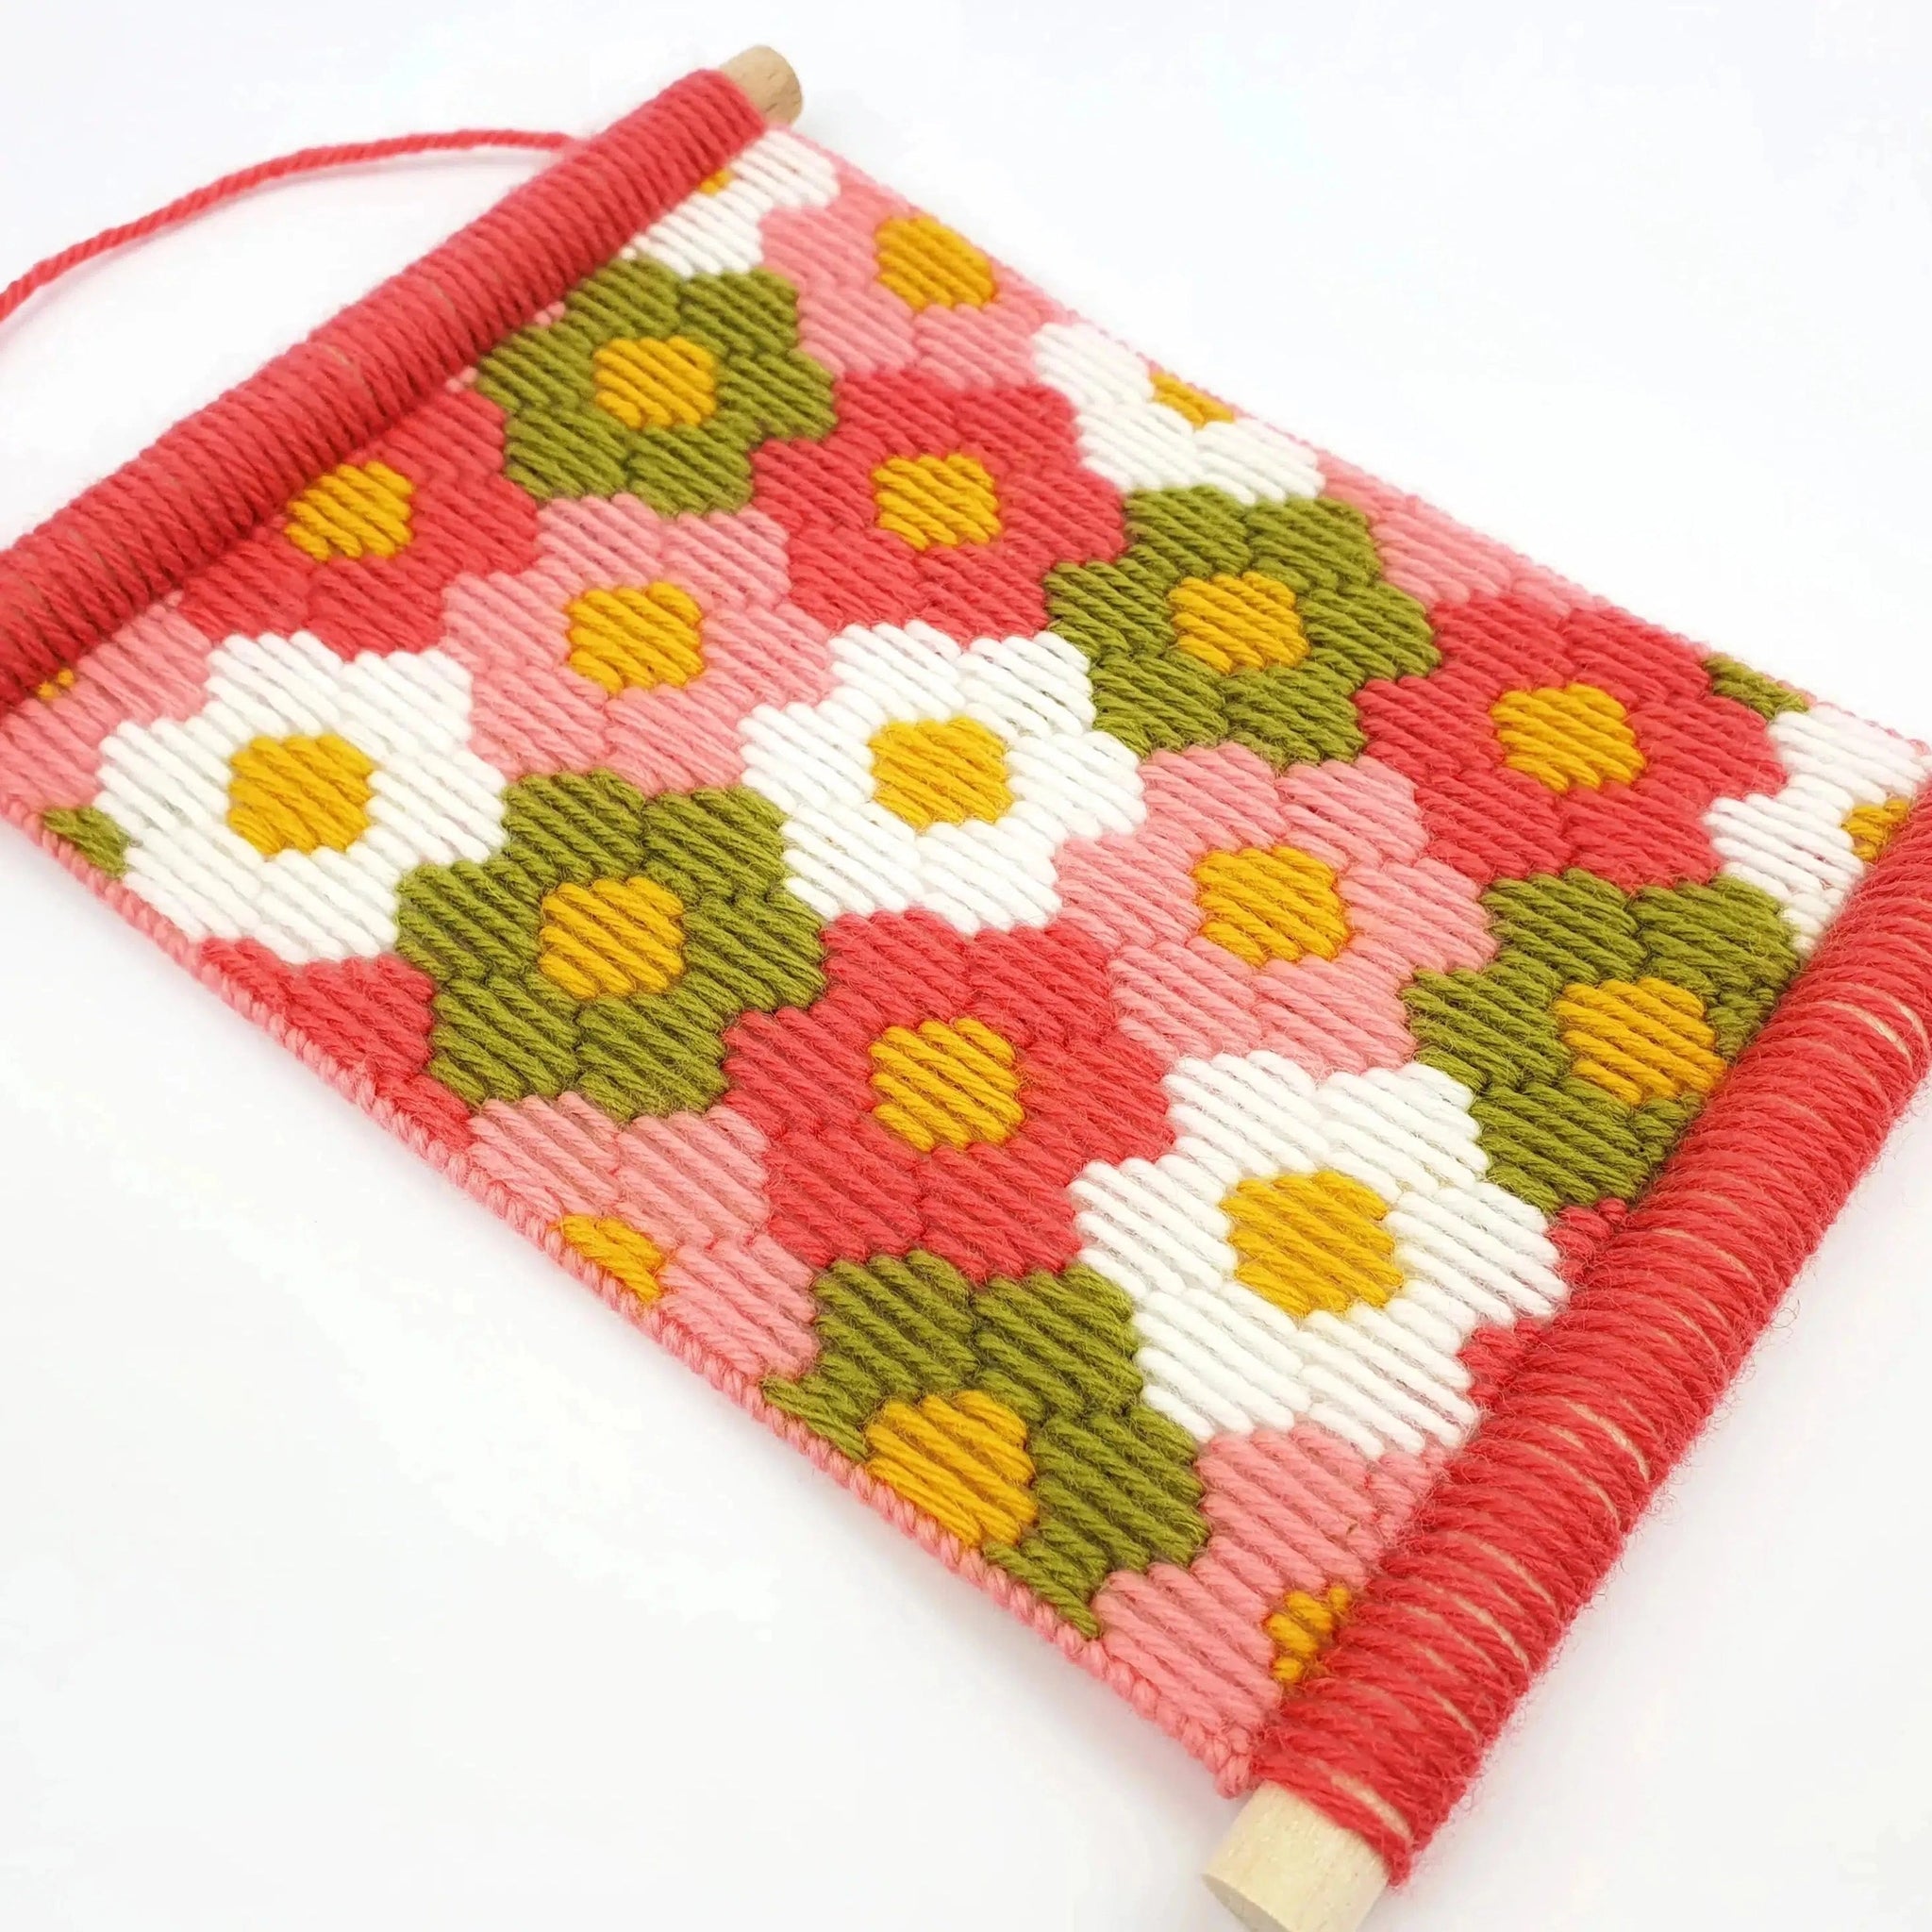 market day embroidery kit – cozyblue